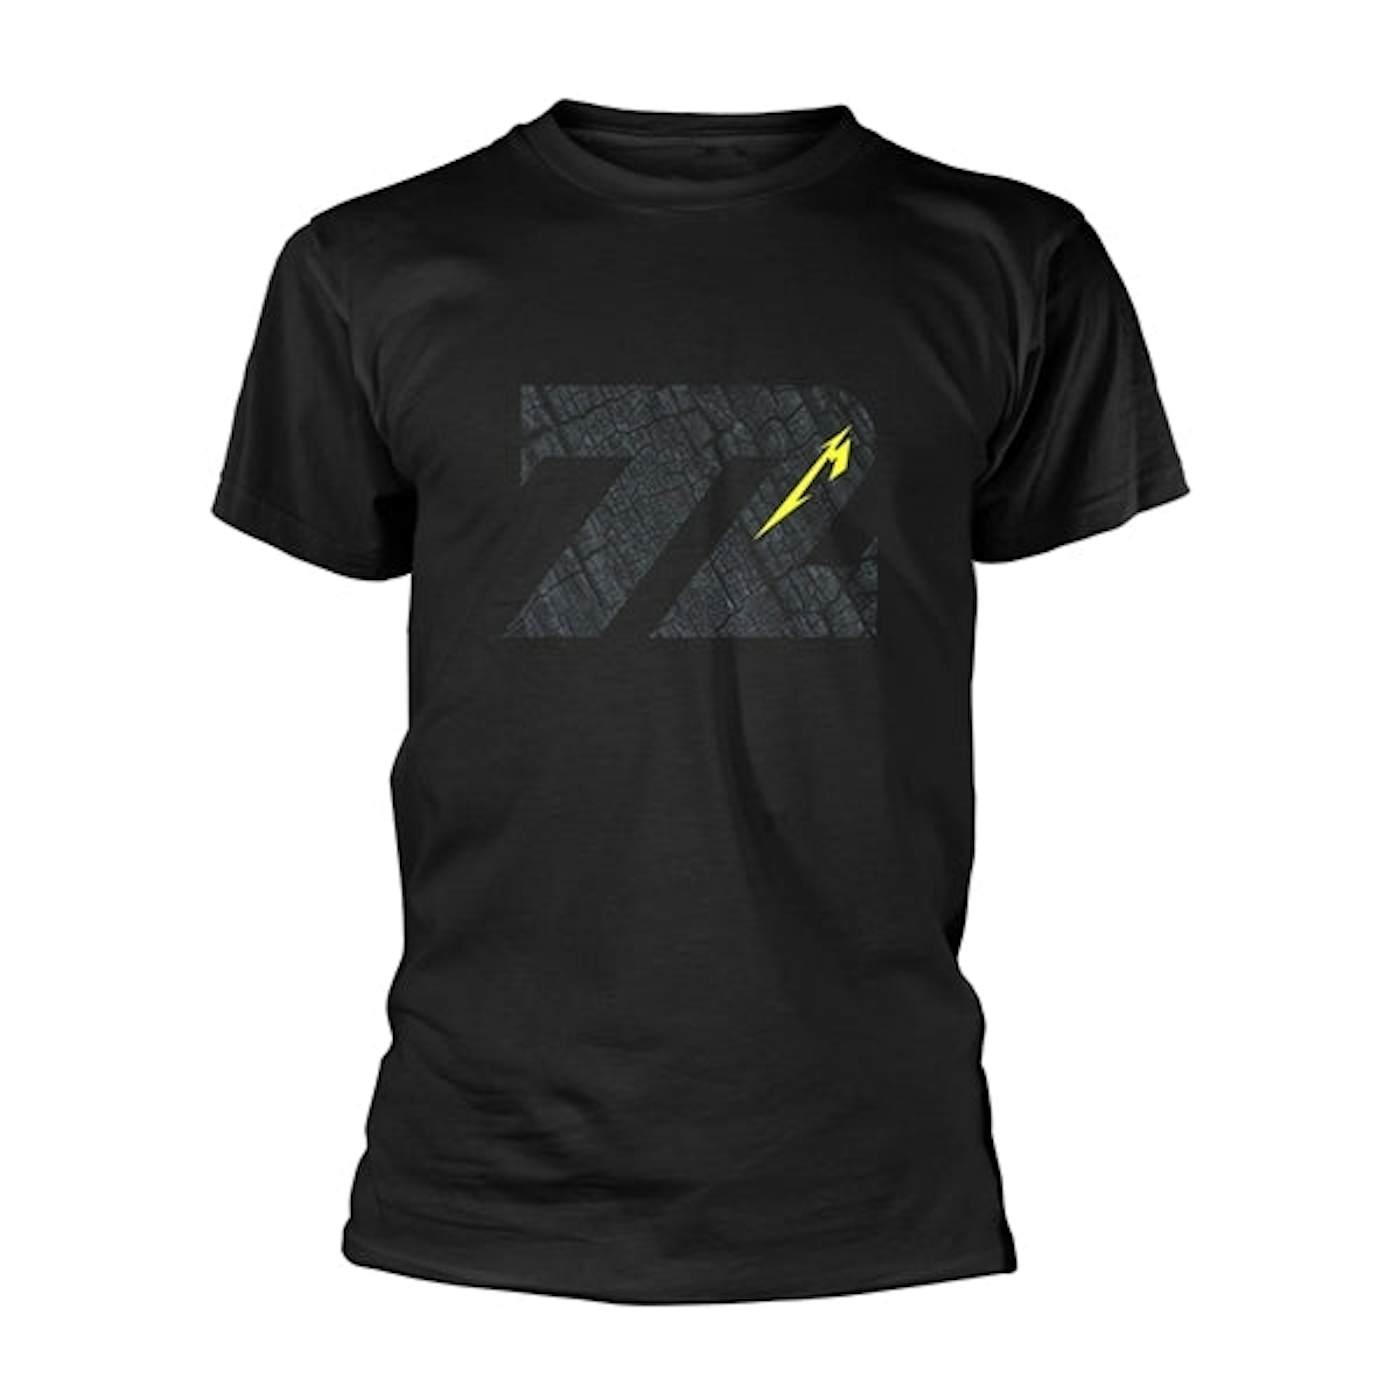  Metallica T Shirt - Charred 72